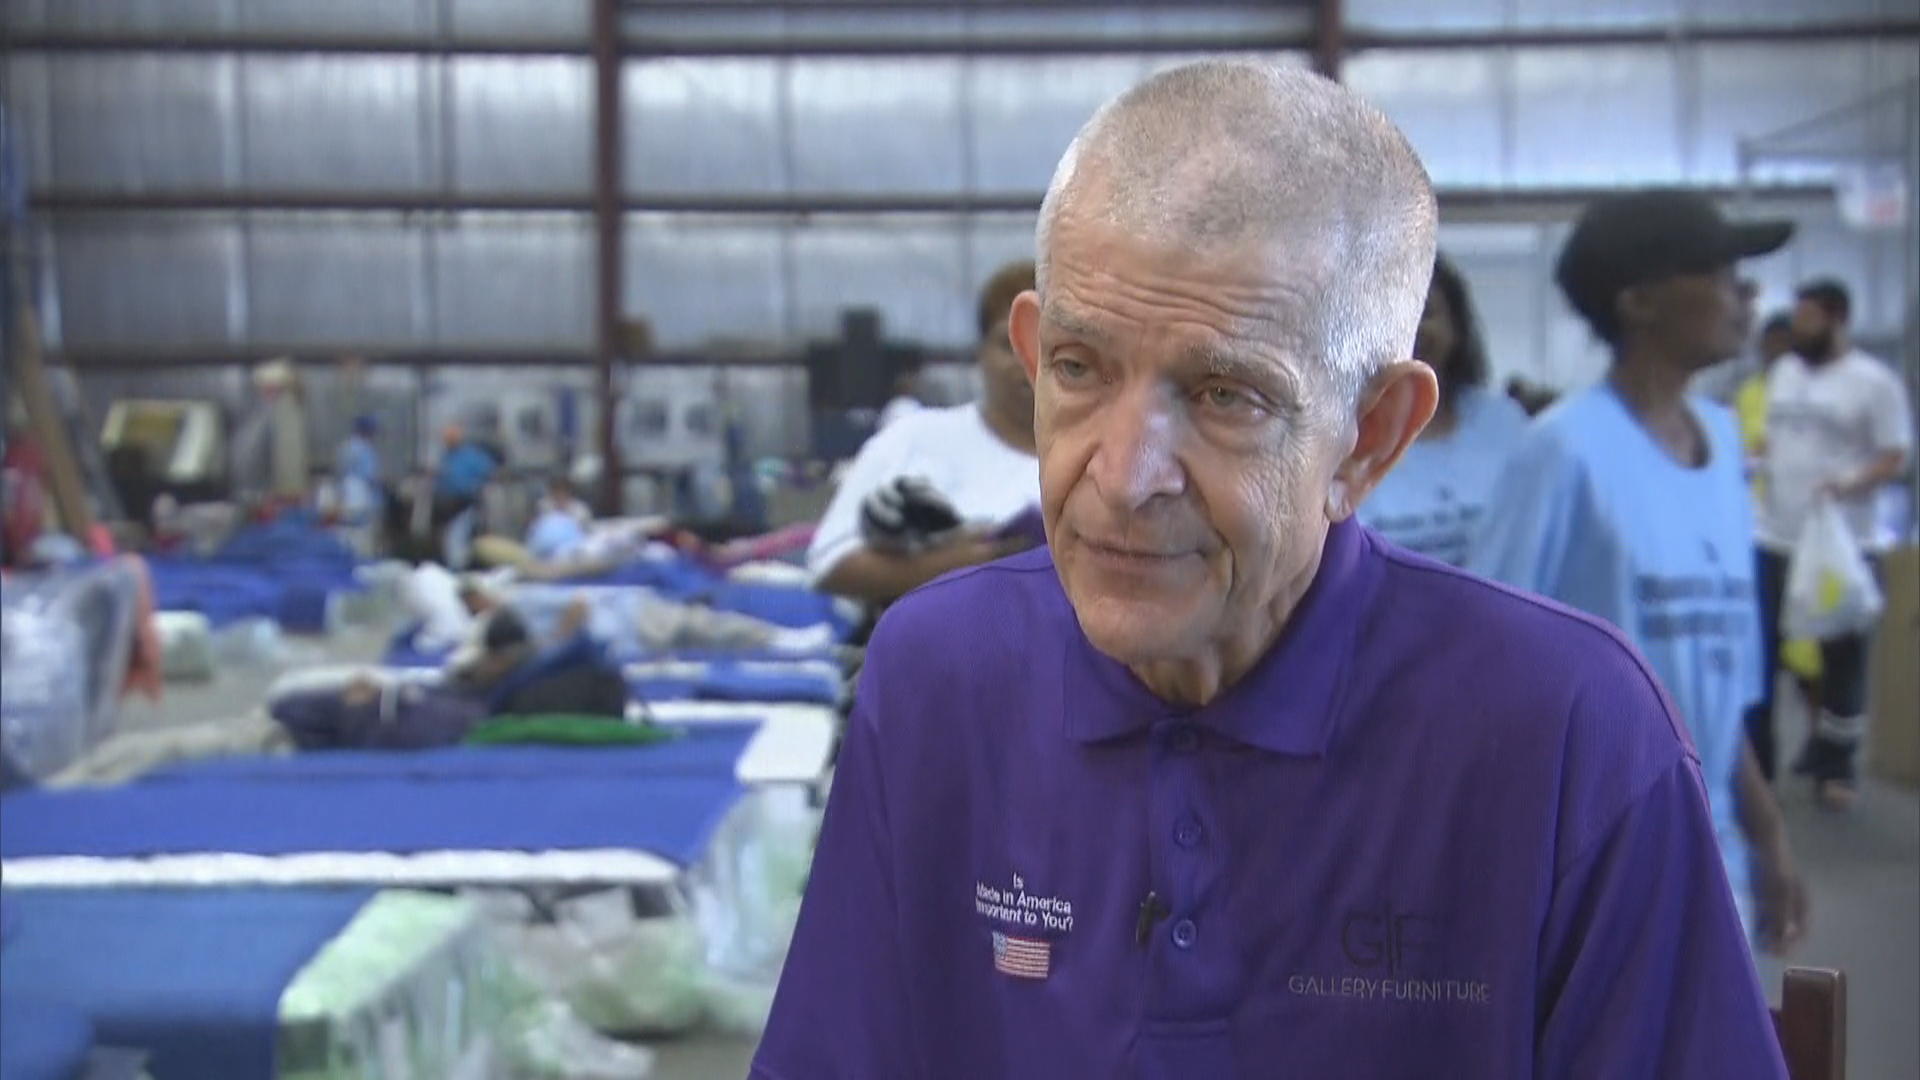 Mattress Mack, Houston furniture store owner offers refuge for Houston  flood victims - CBS News